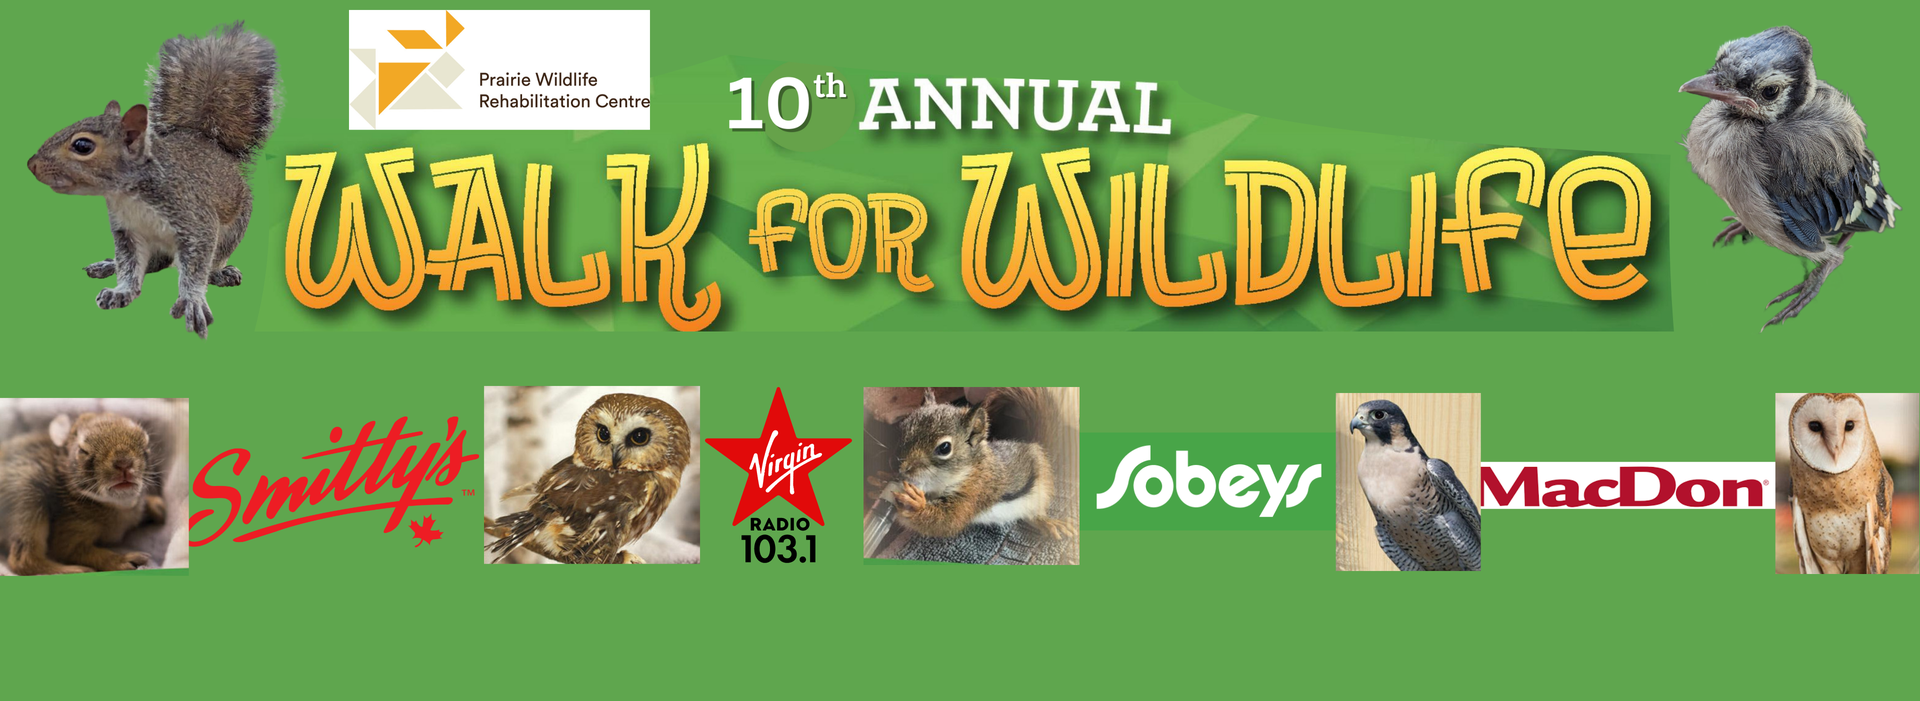 10th Annual Walk For Wildlife